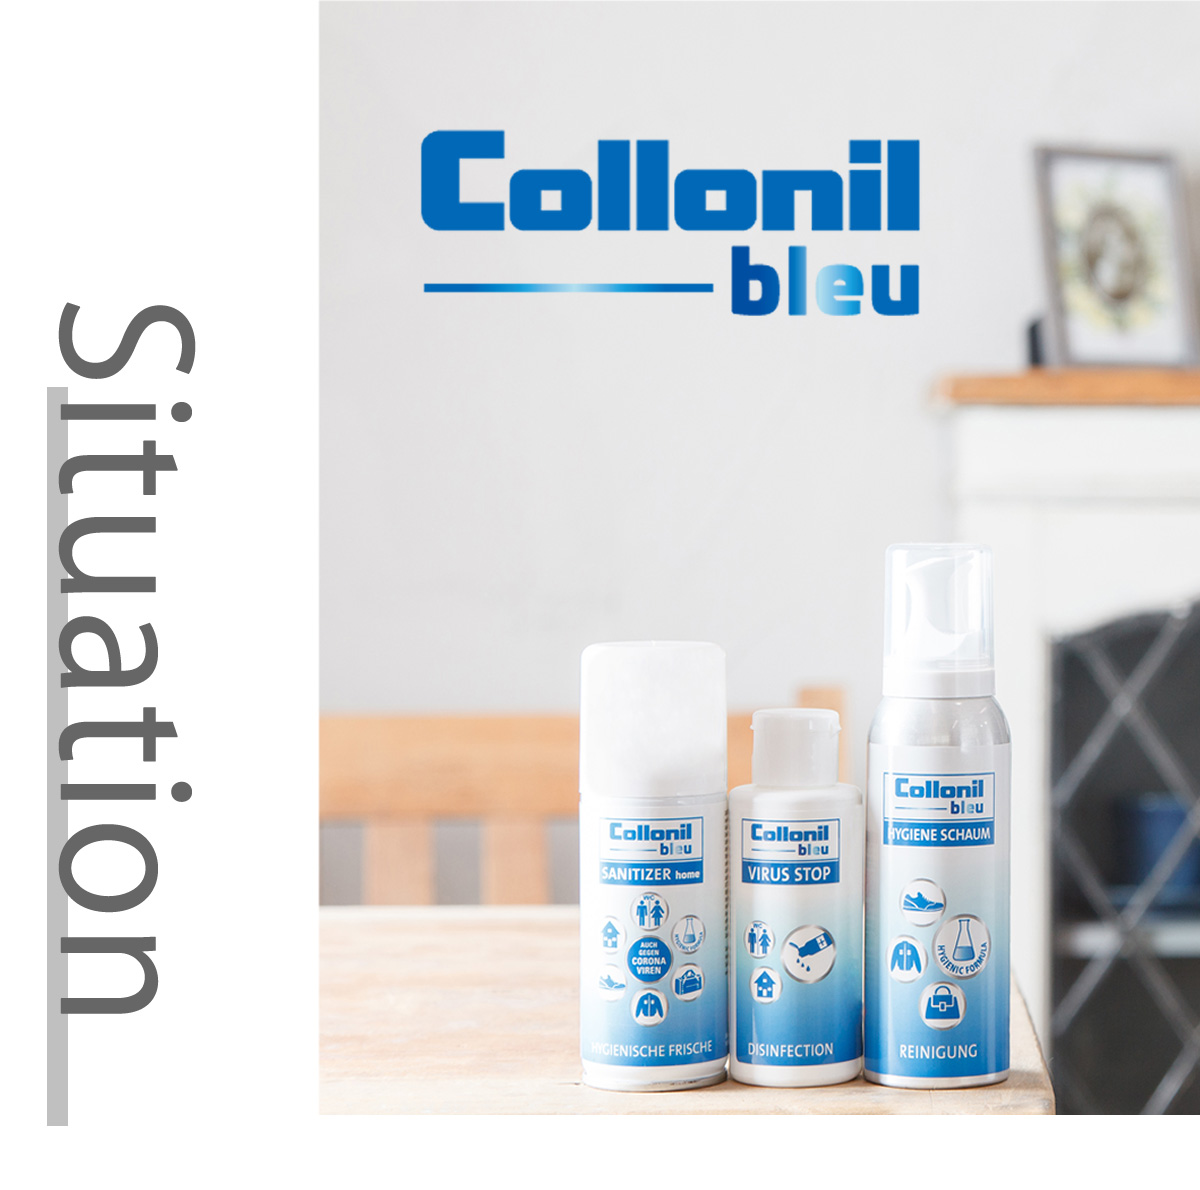 Collonil bleu